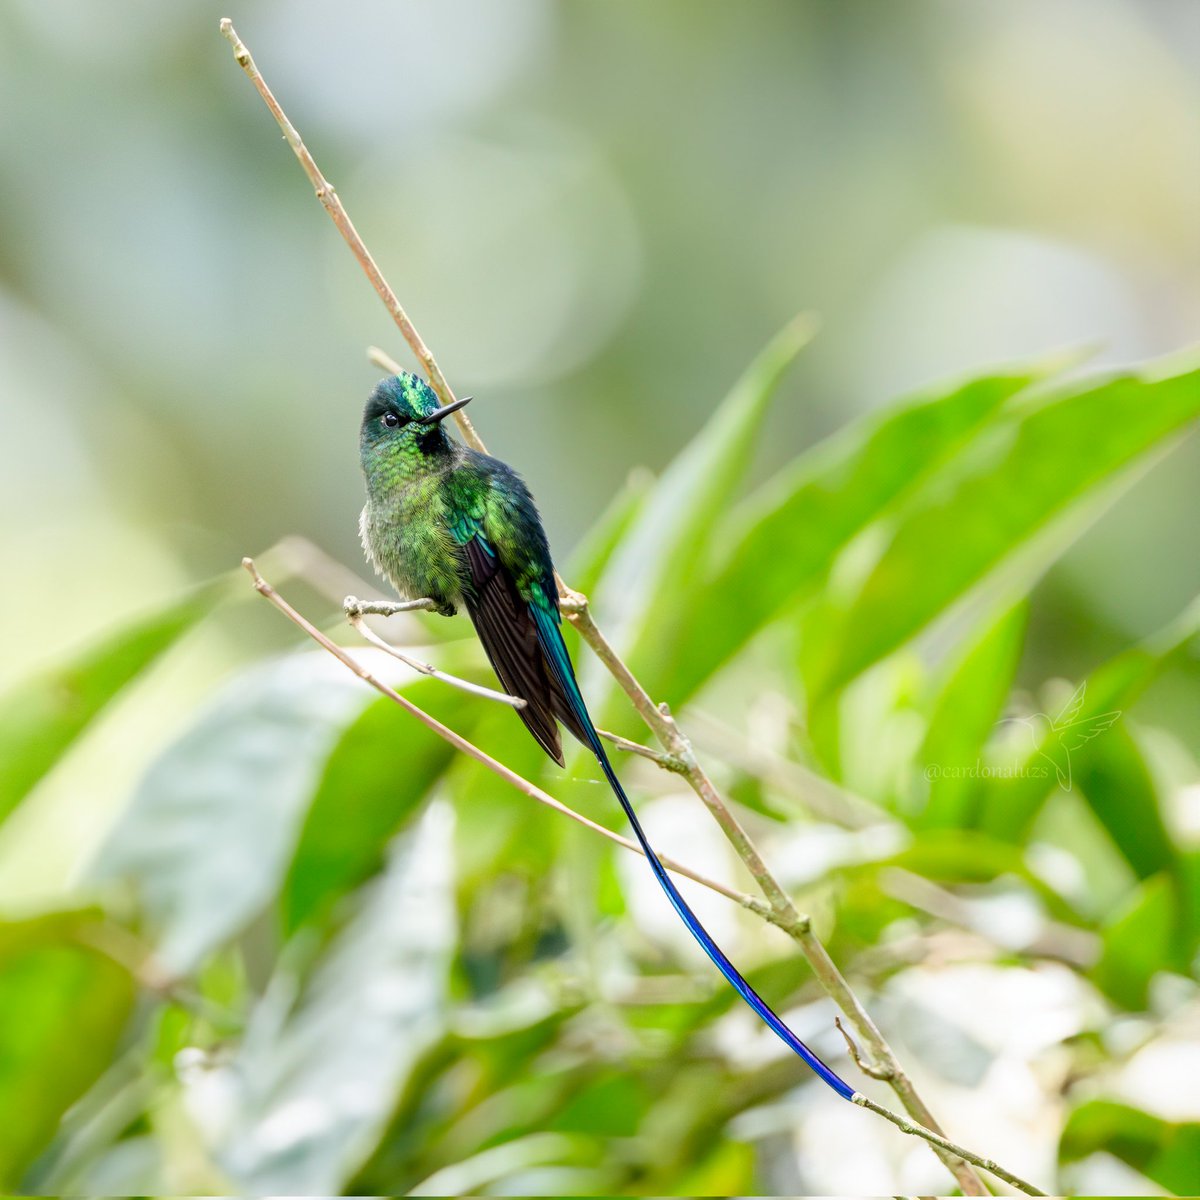 #miercolesdeemplumados 

🇨🇴Cometa verdiazul
🔬Aglaiocercus kingi

#hummingbirds